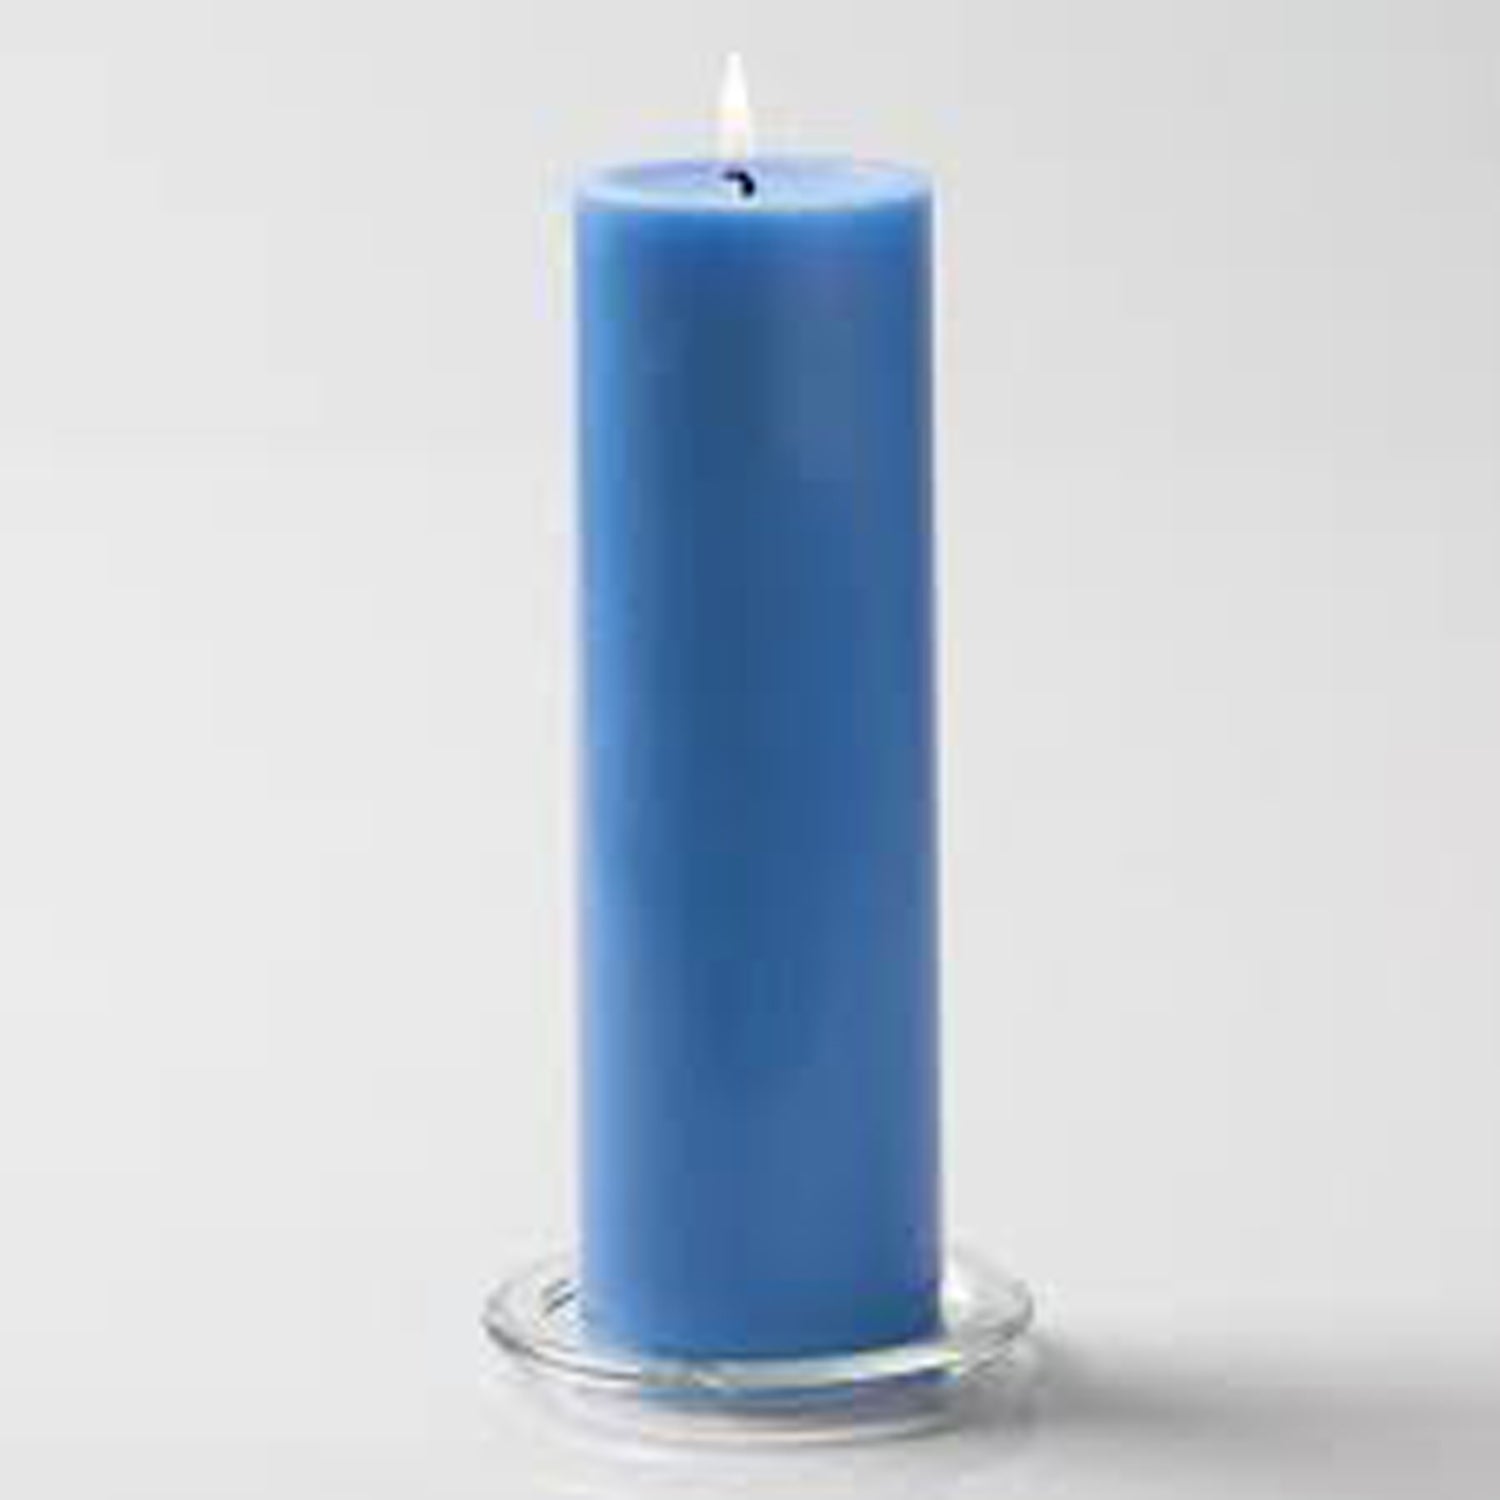 Earthy aroma soy wax pillar candle